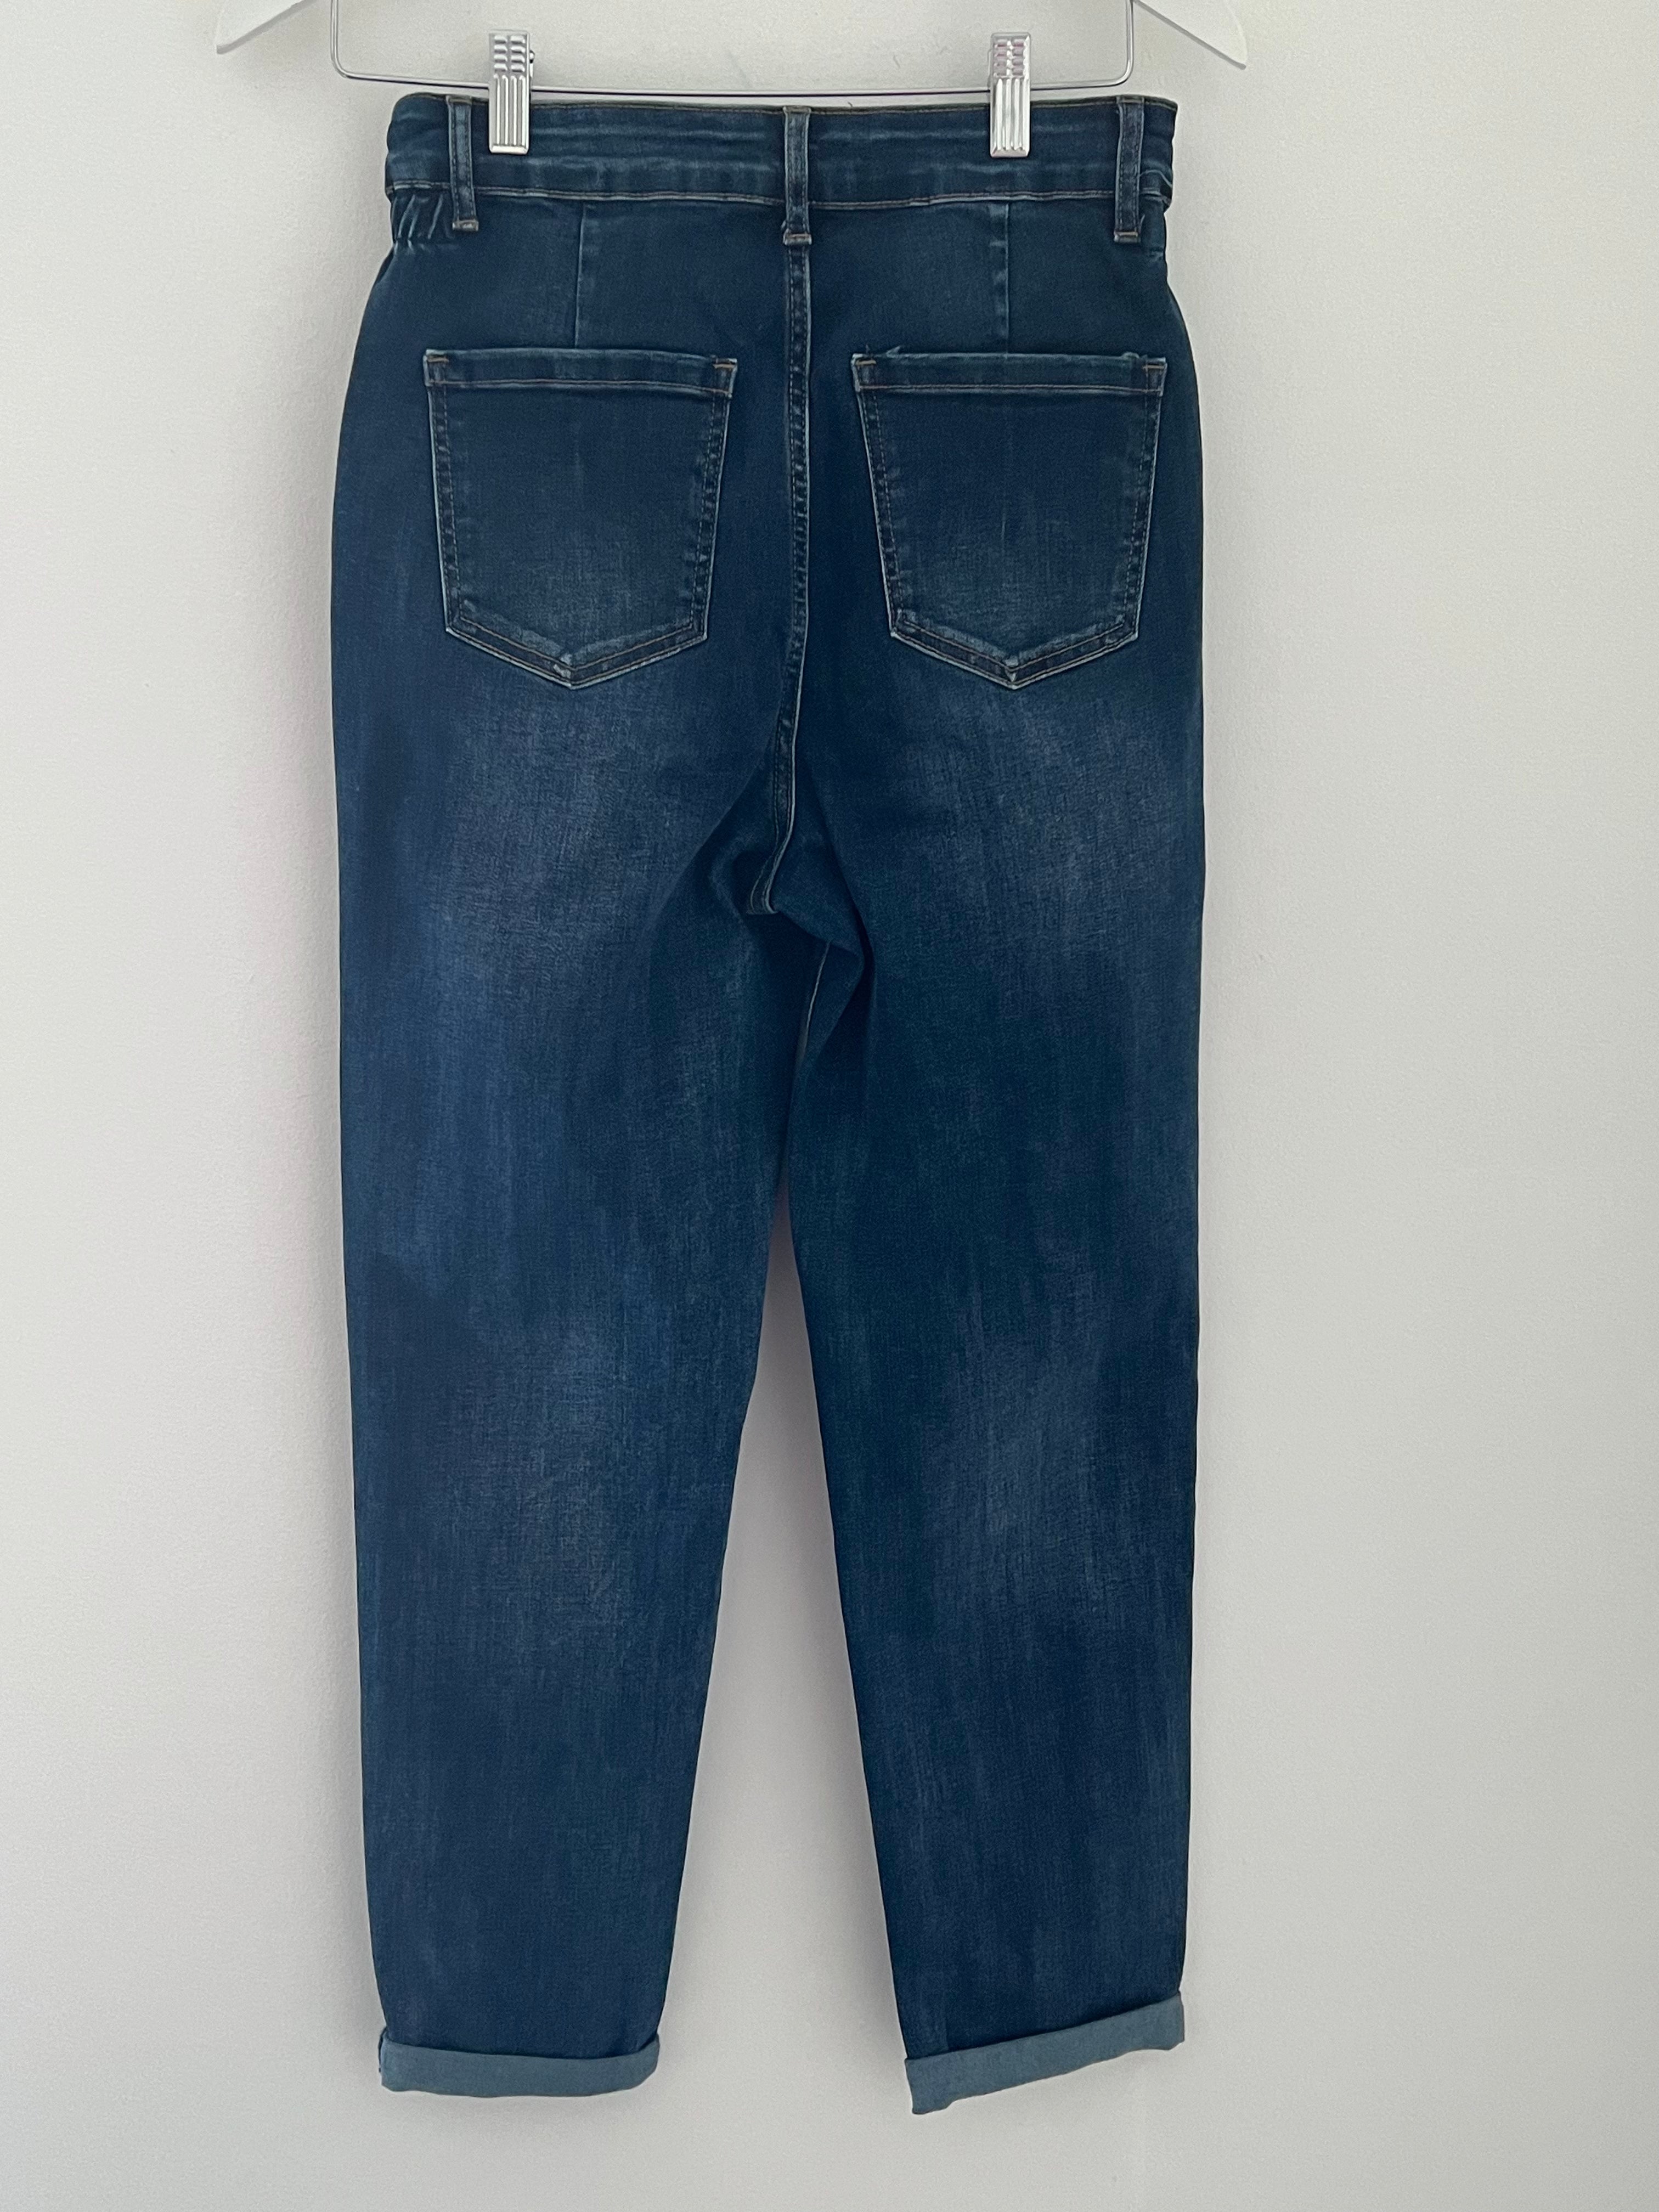 Slimfit Stretch Two Button Jeans in Blue Denim